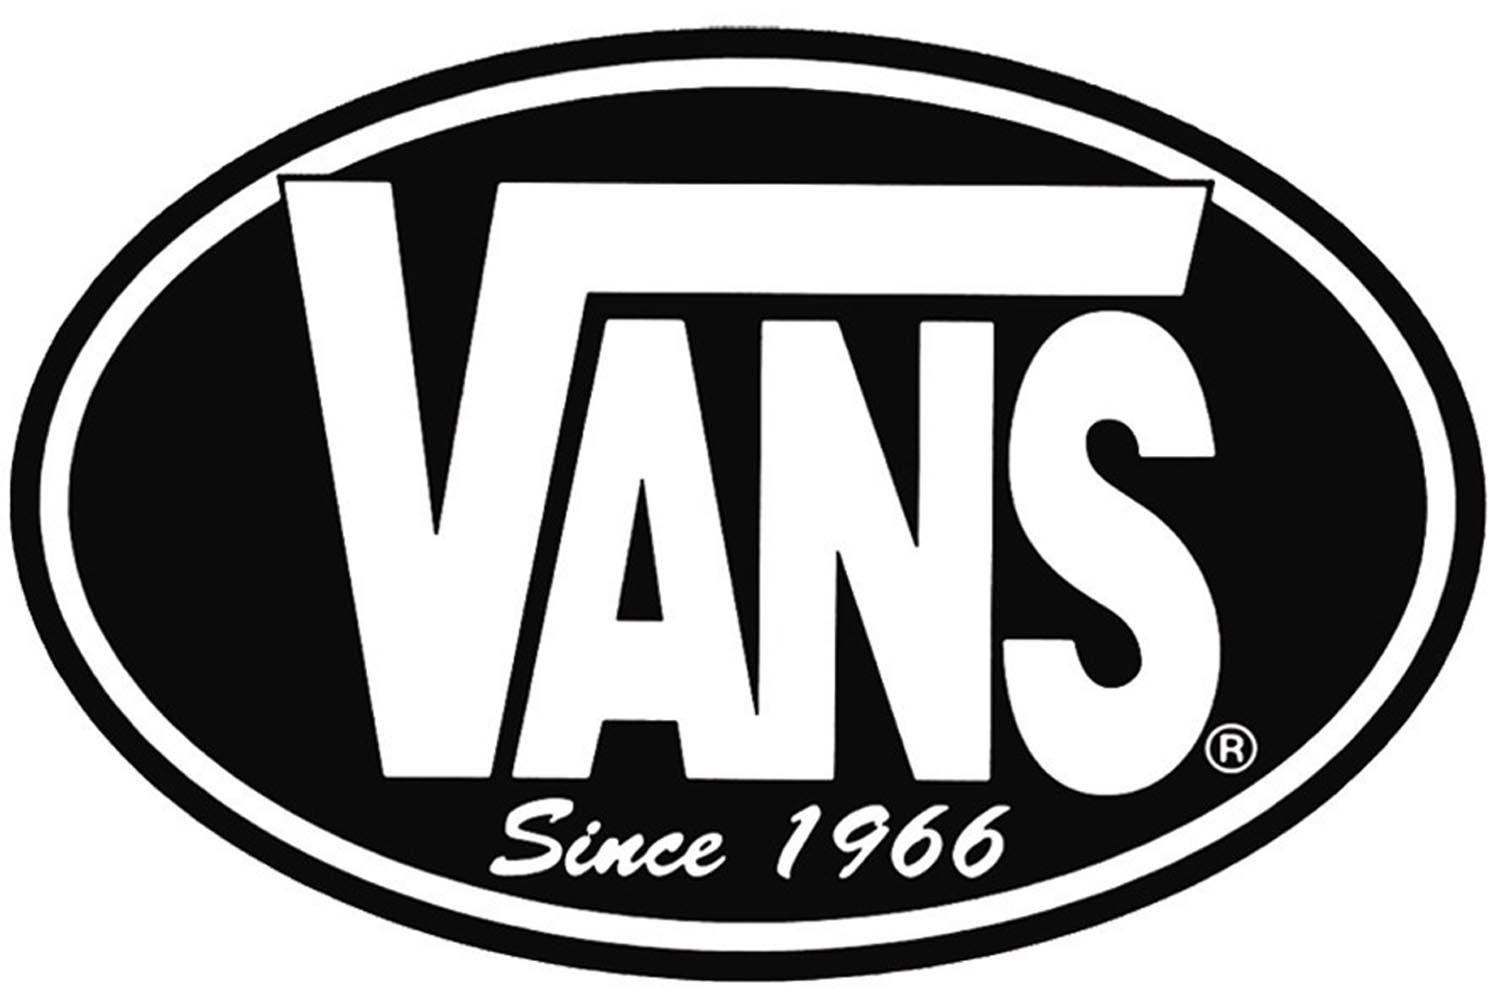 Vans Skateboard Logo - Pin by Justin Doyle on surfing/skating | Pinterest | Vans logo, Vans ...